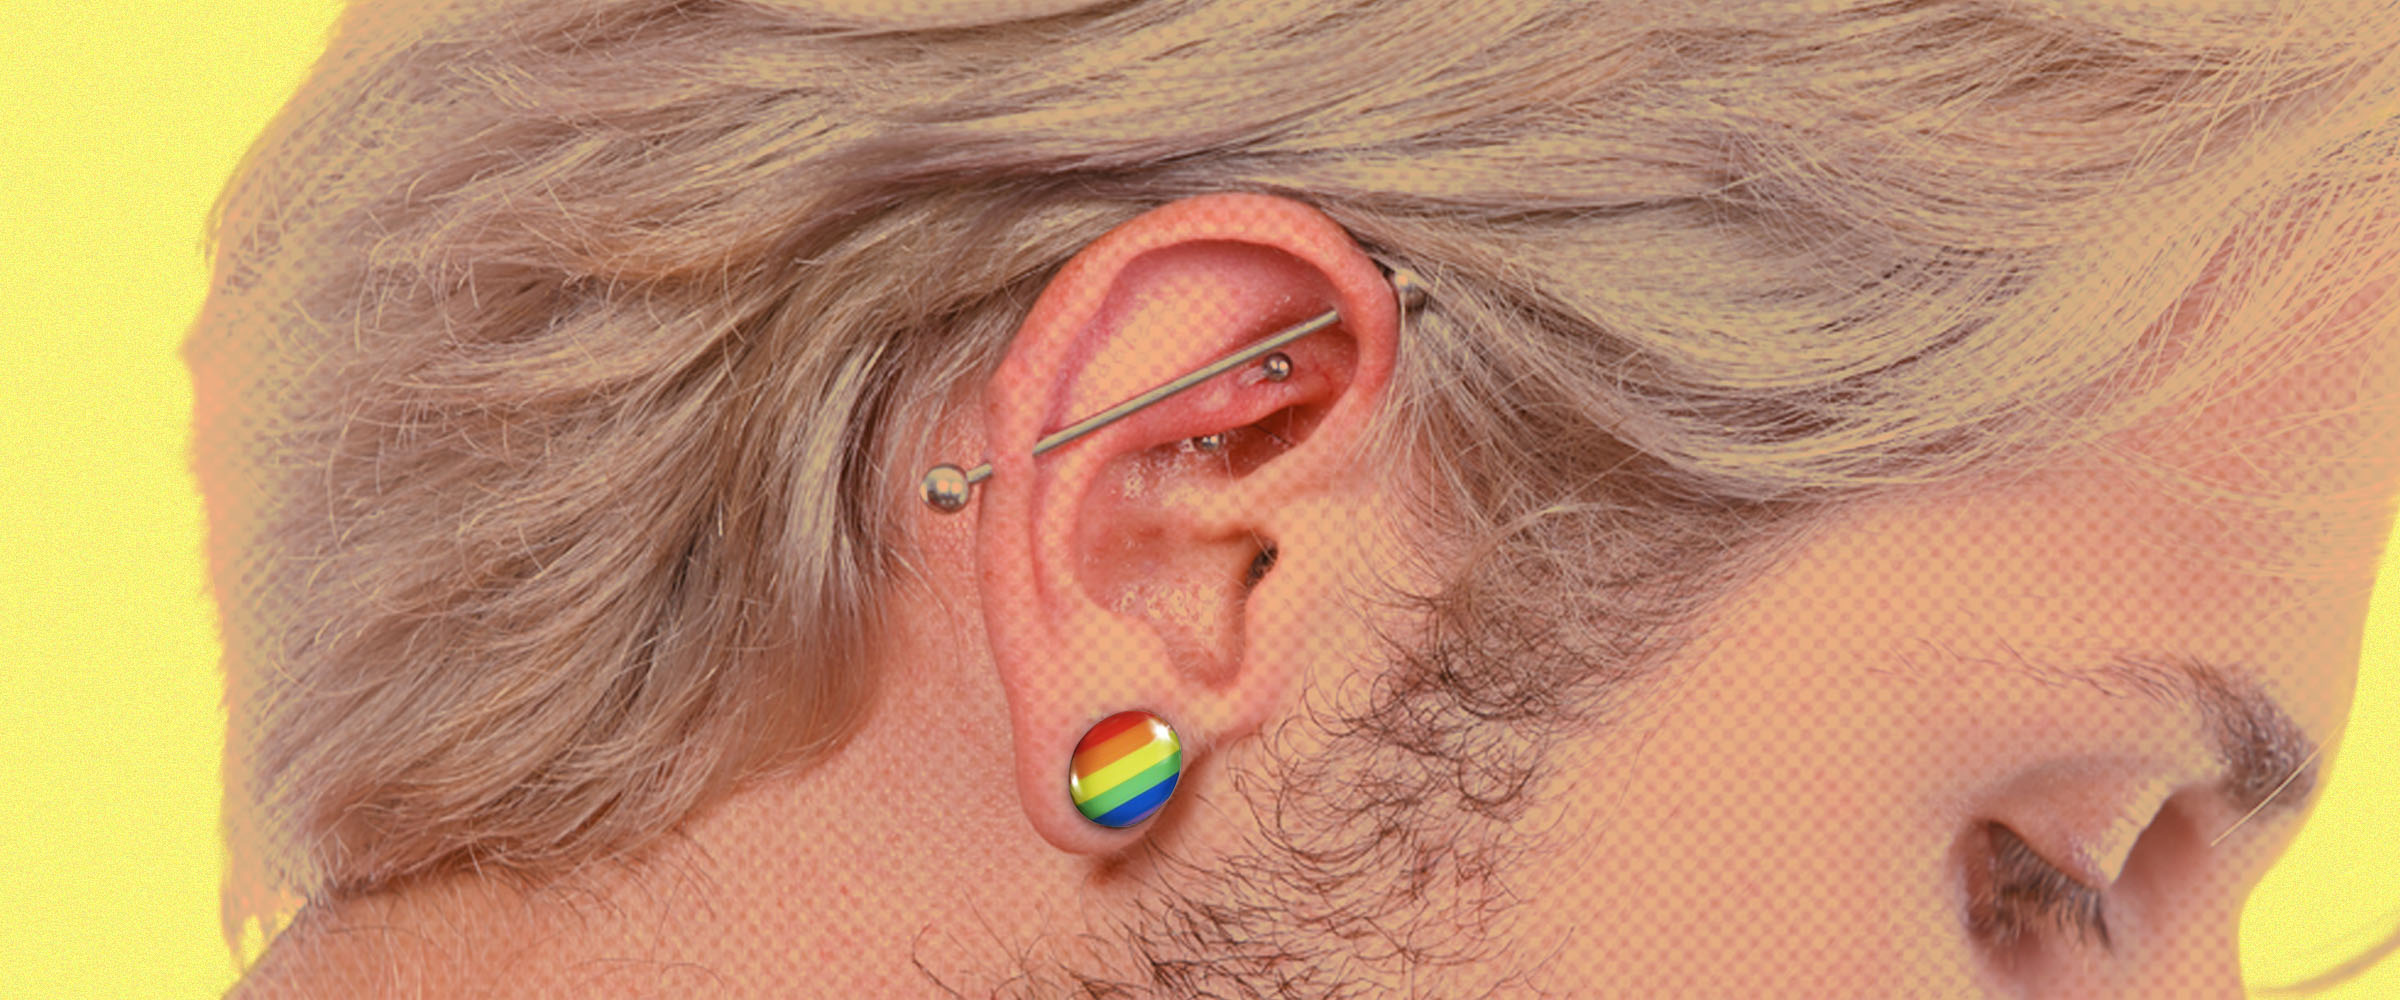 Gay ear piercing which side